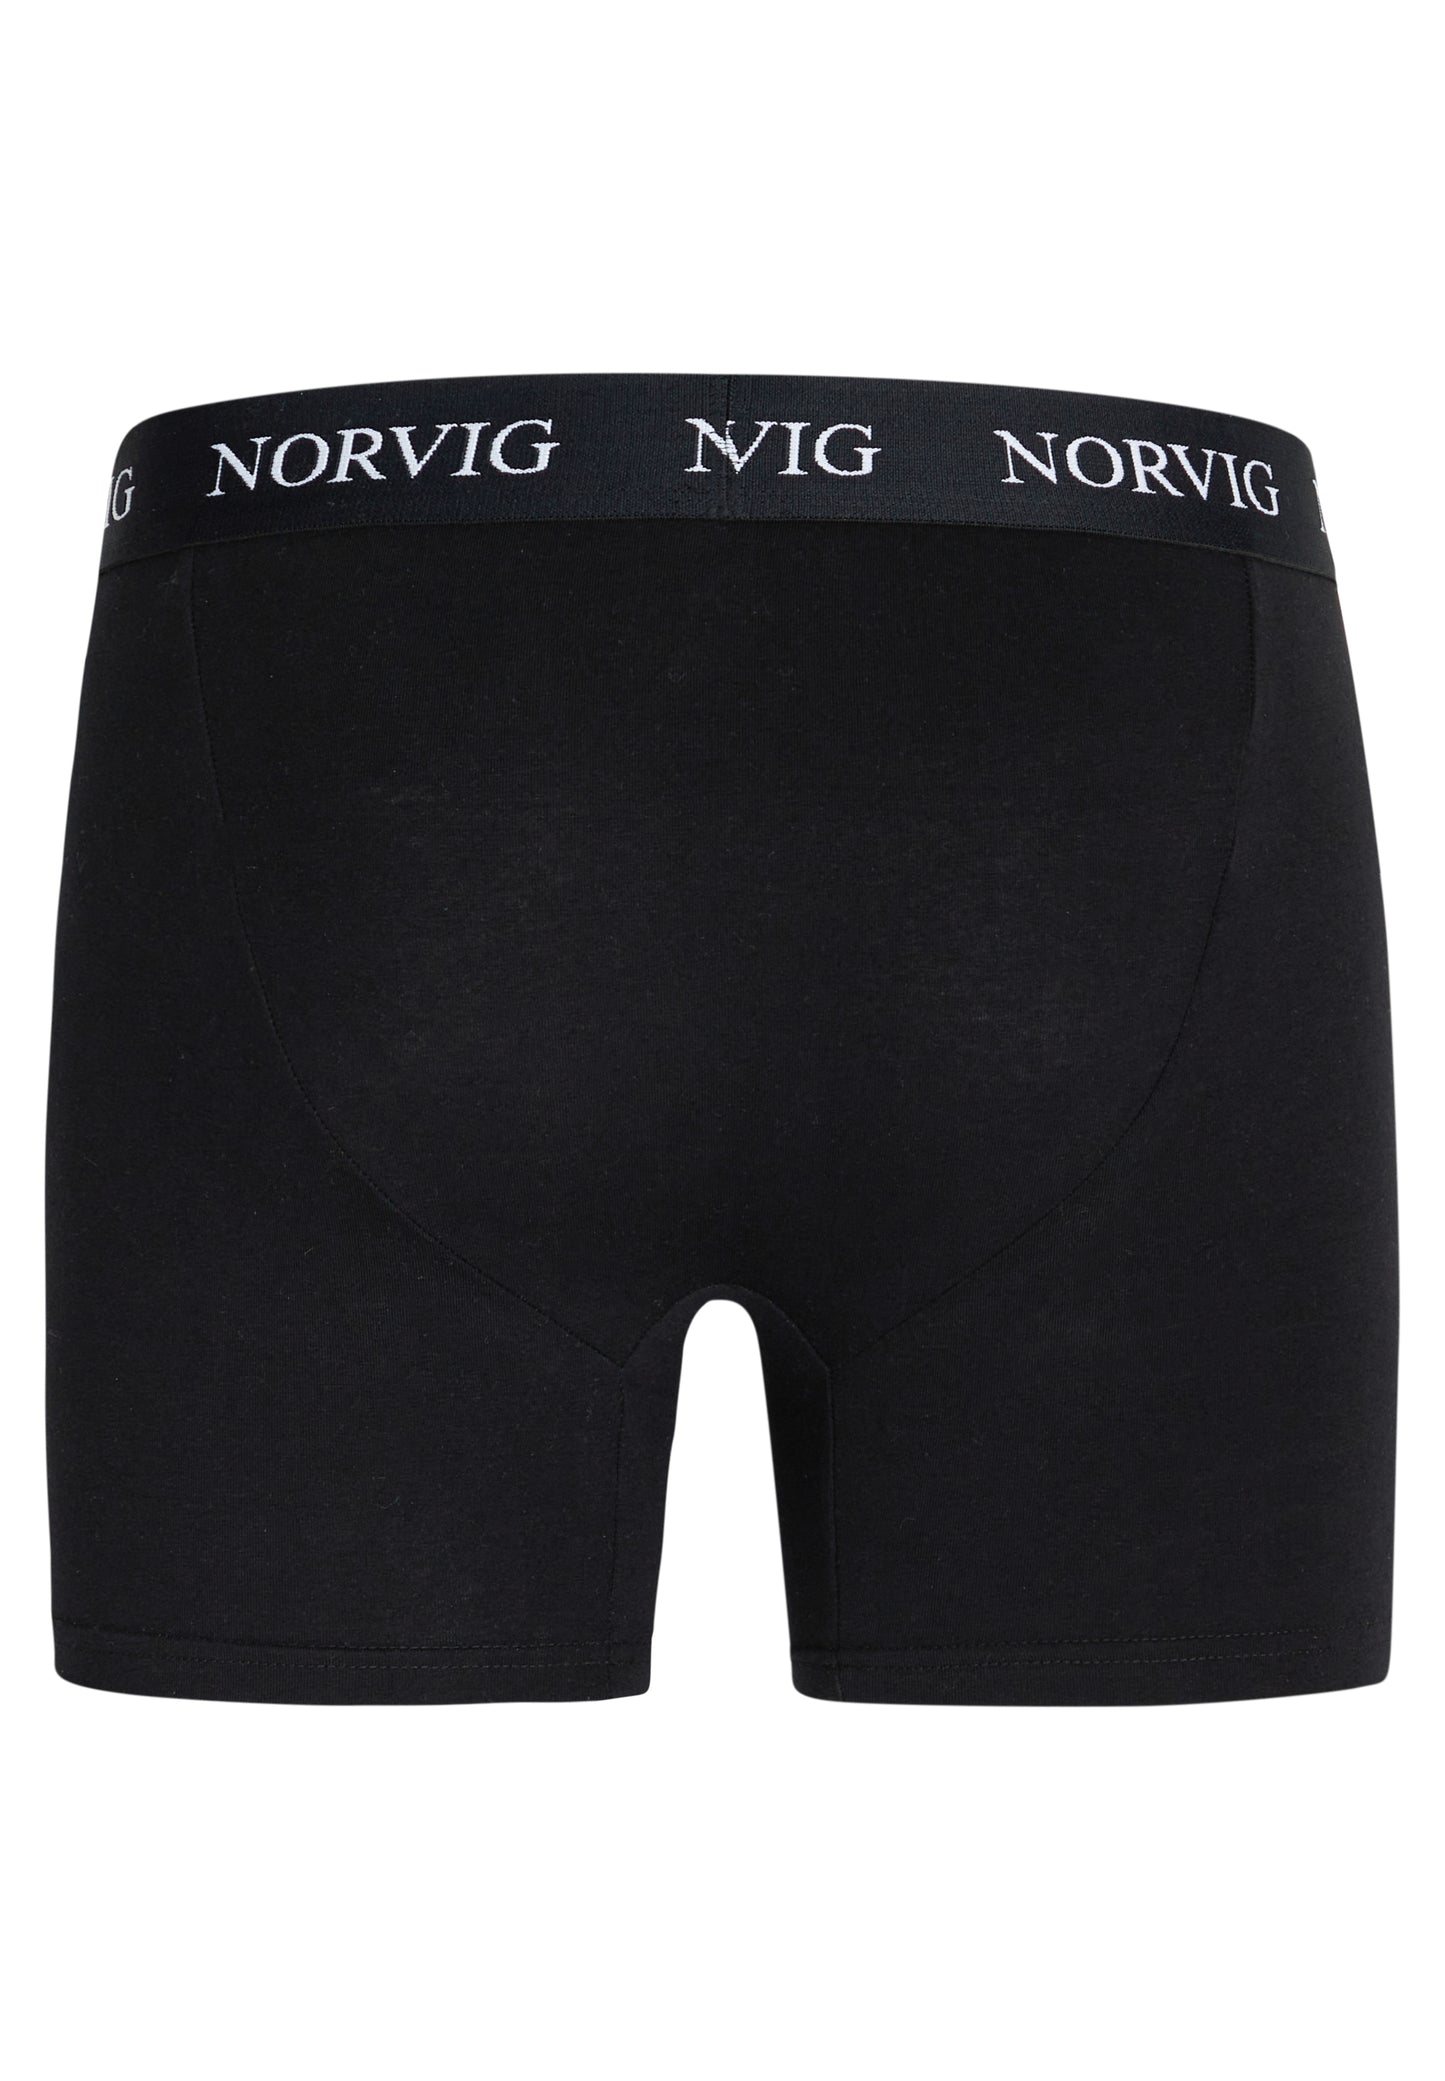 NORVIG 3-pak Tights sort